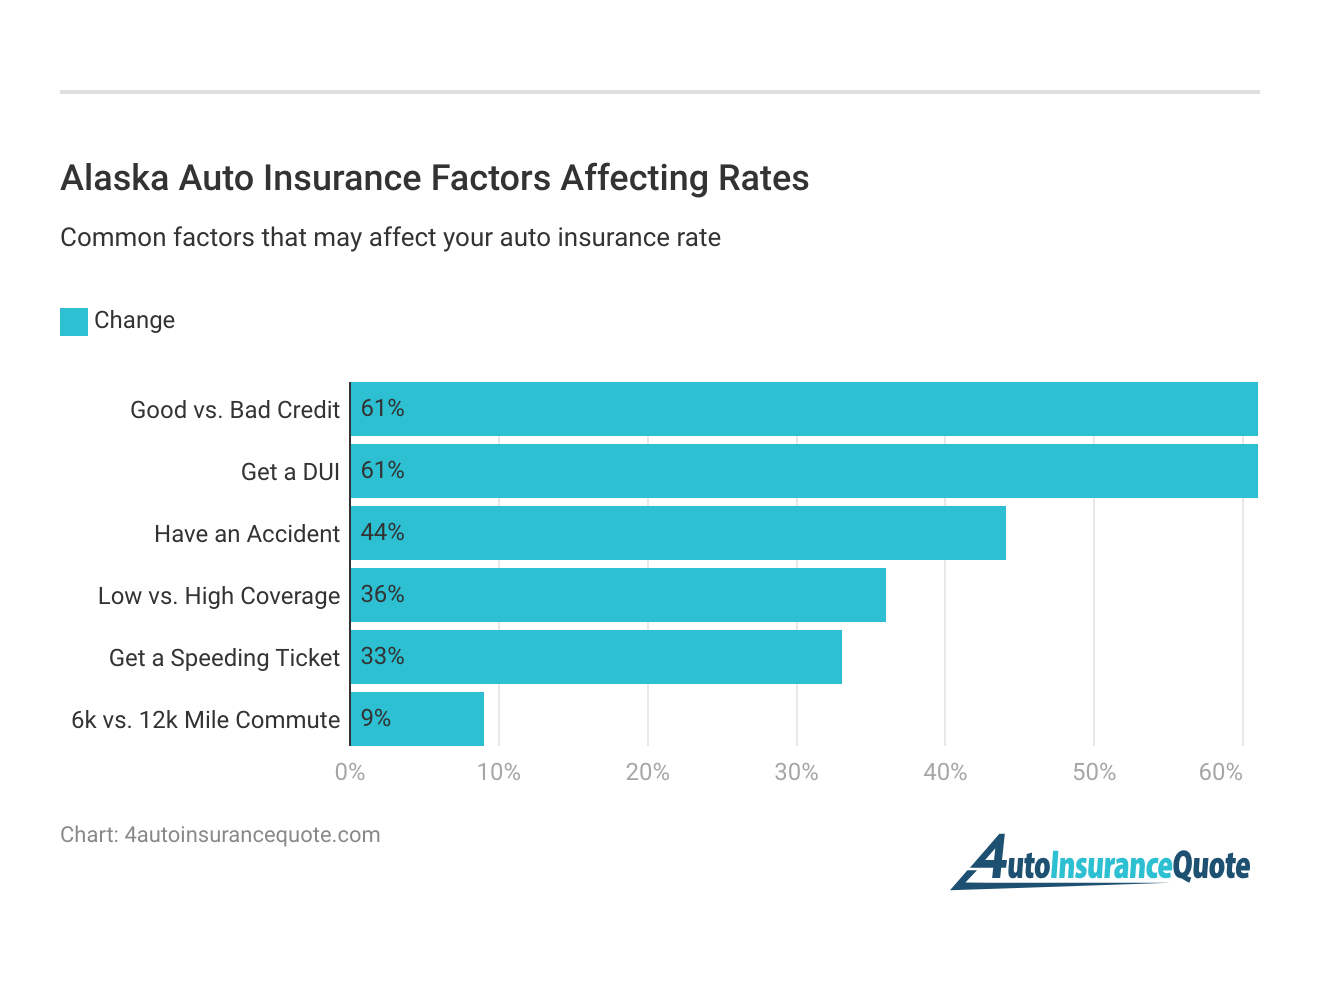 <h3>Alaska Auto Insurance Factors Affecting Rates</h3>